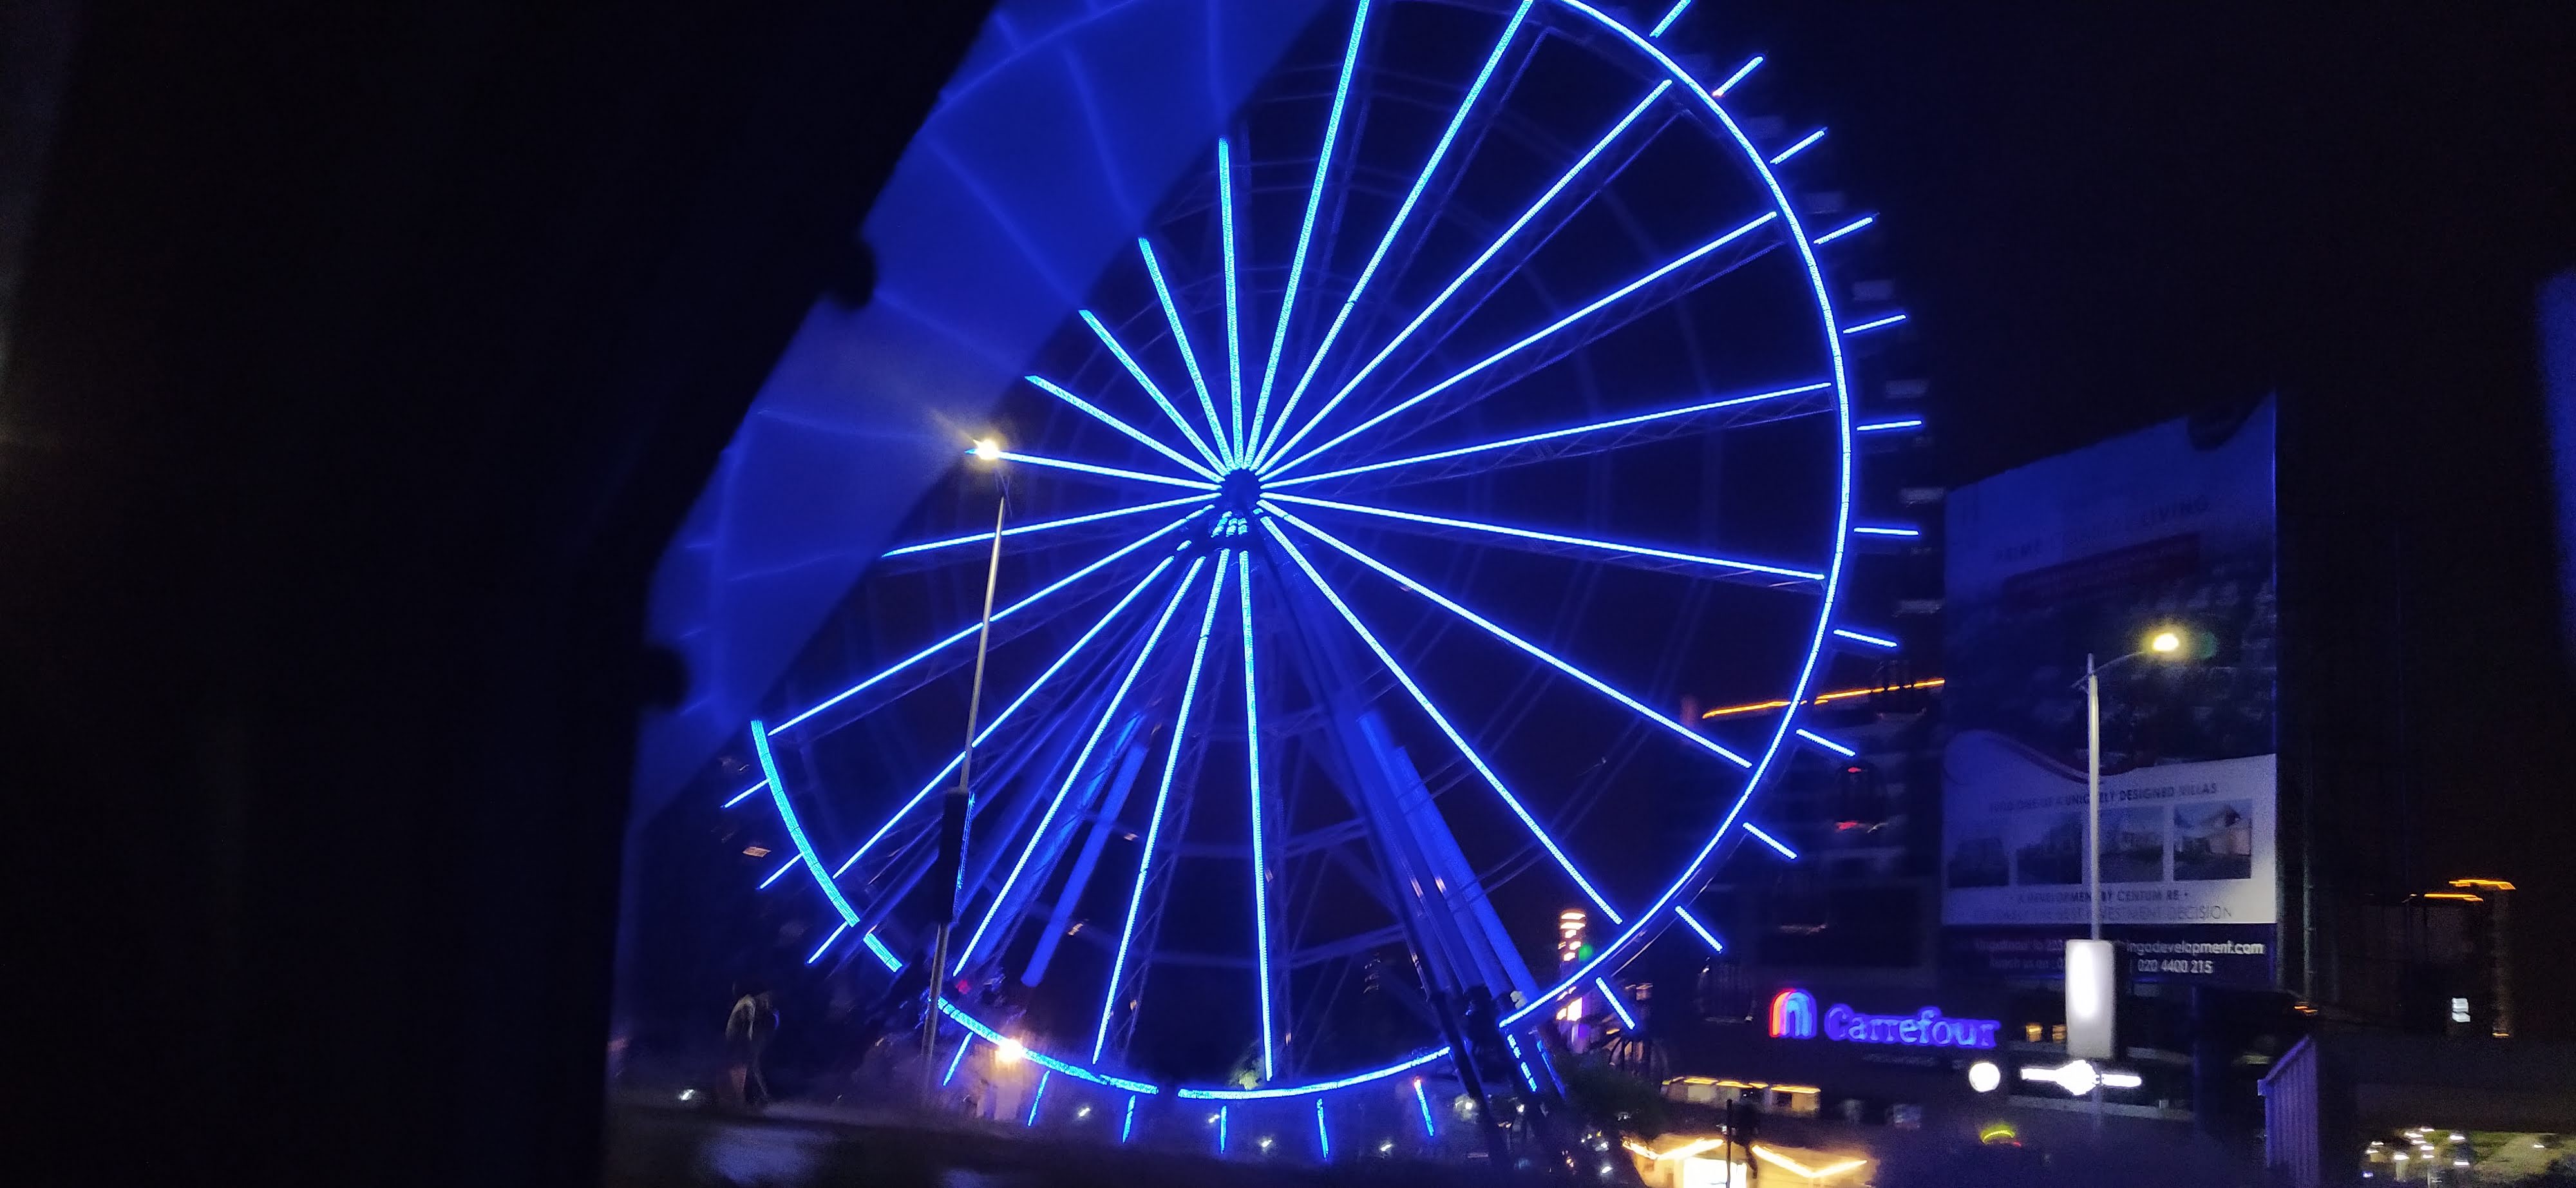 Two Rivers Mall Ferris Wheel - Night View3